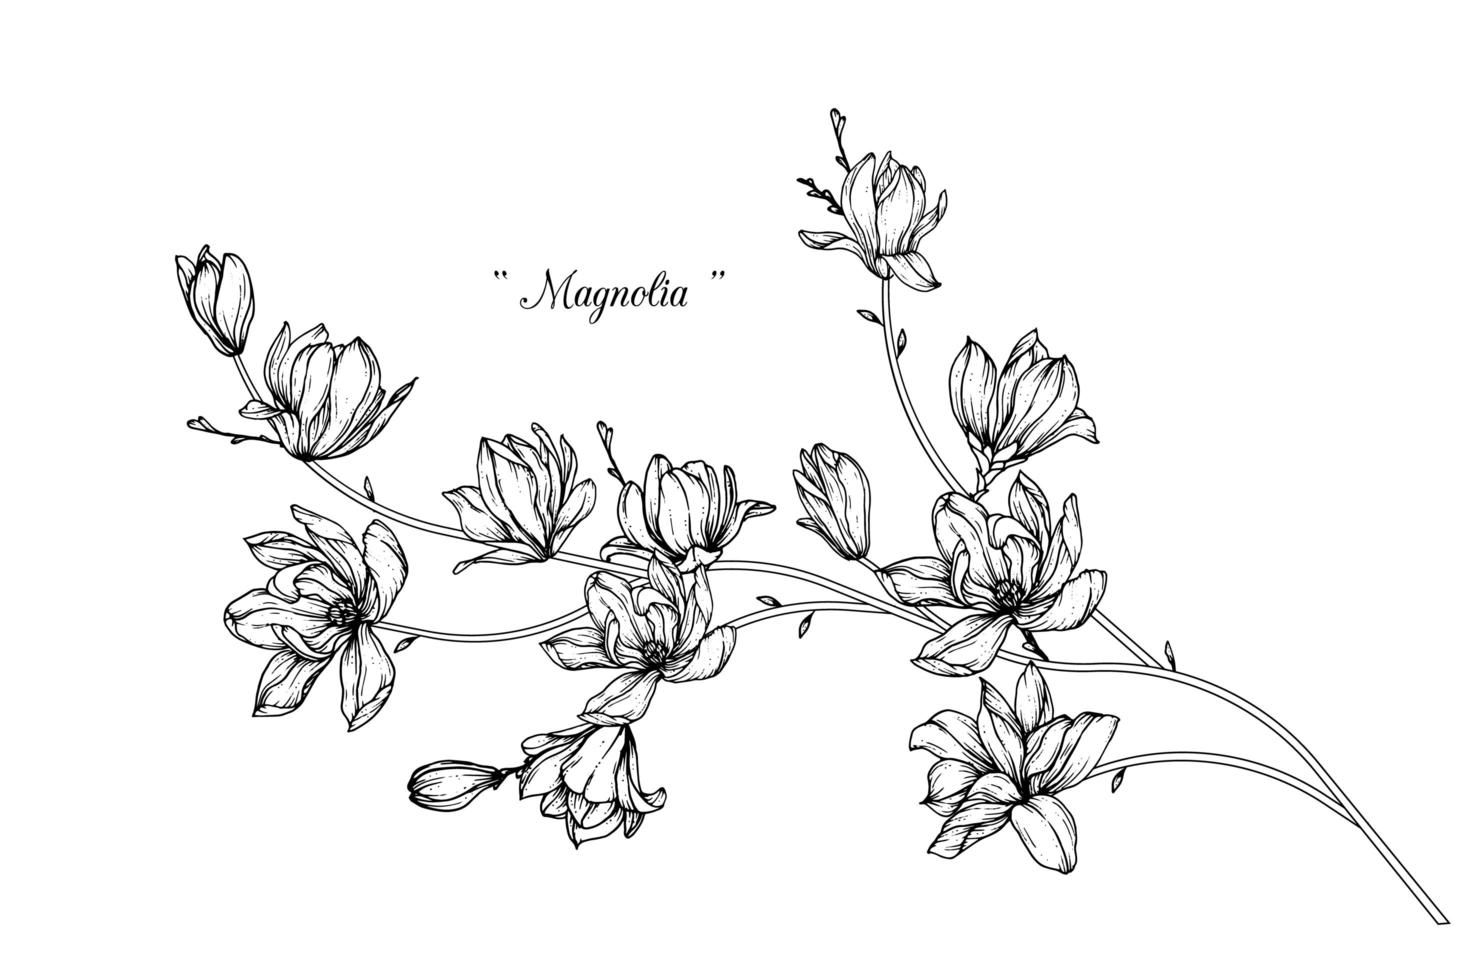 Magnolia flower drawings vector